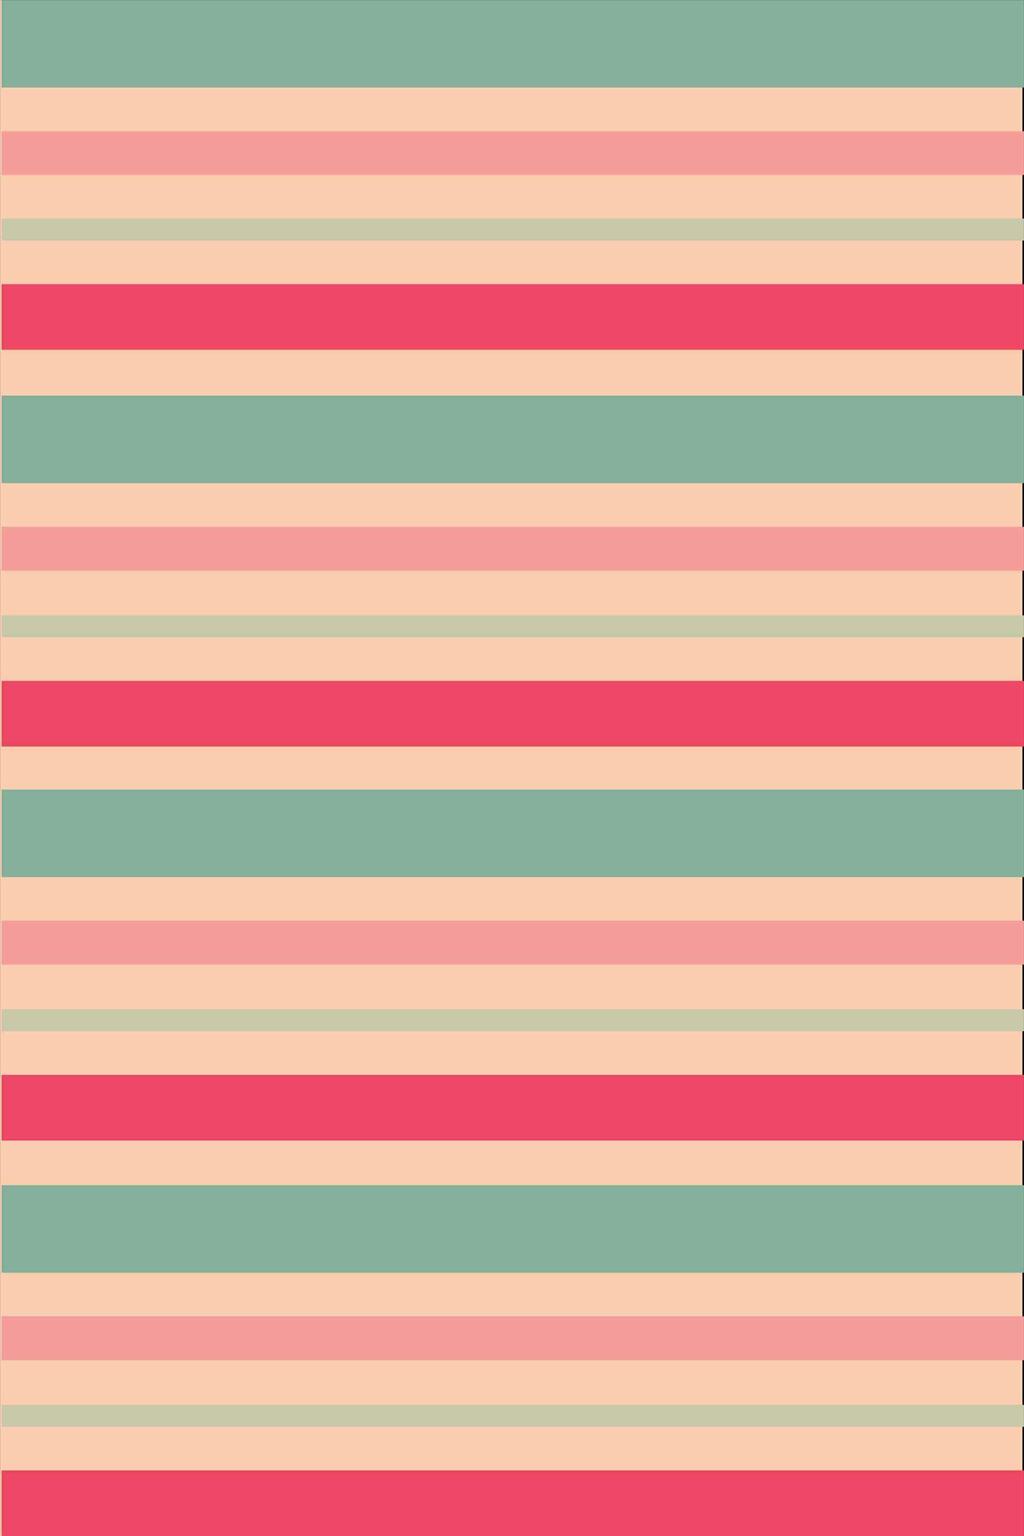 Download Wallpaper Tumblr Pattern Background Tumblr Iphone Hd